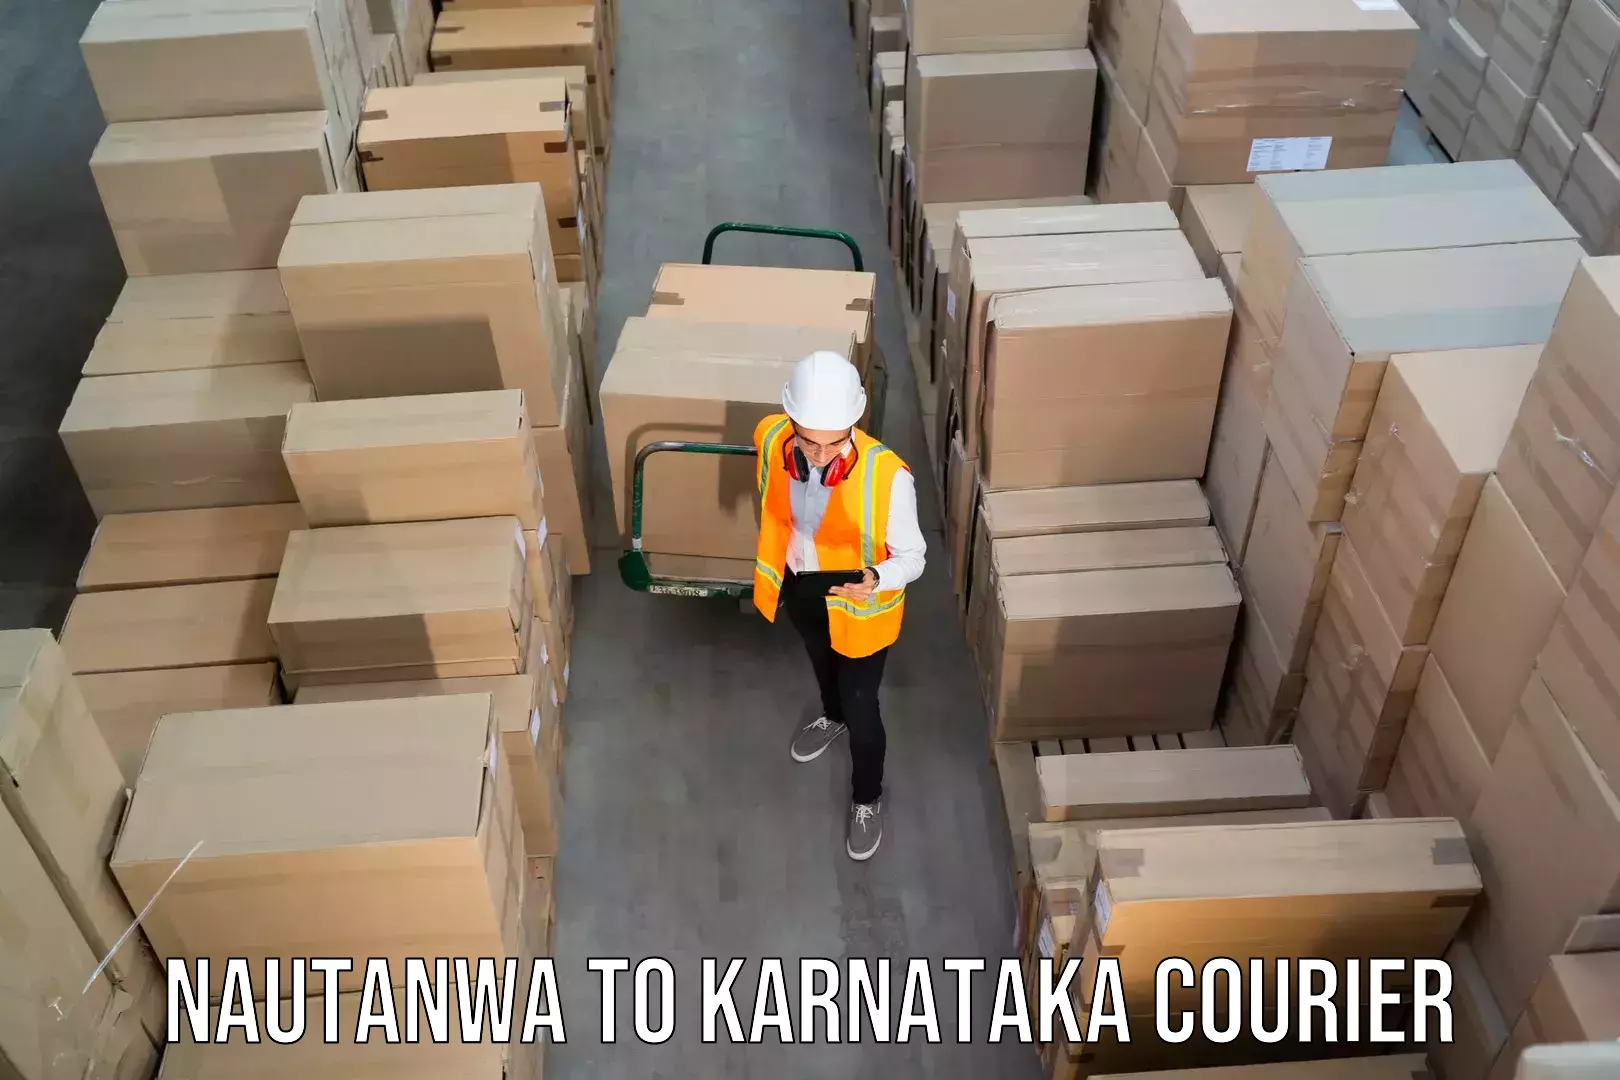 Multi-service courier options Nautanwa to Karnataka